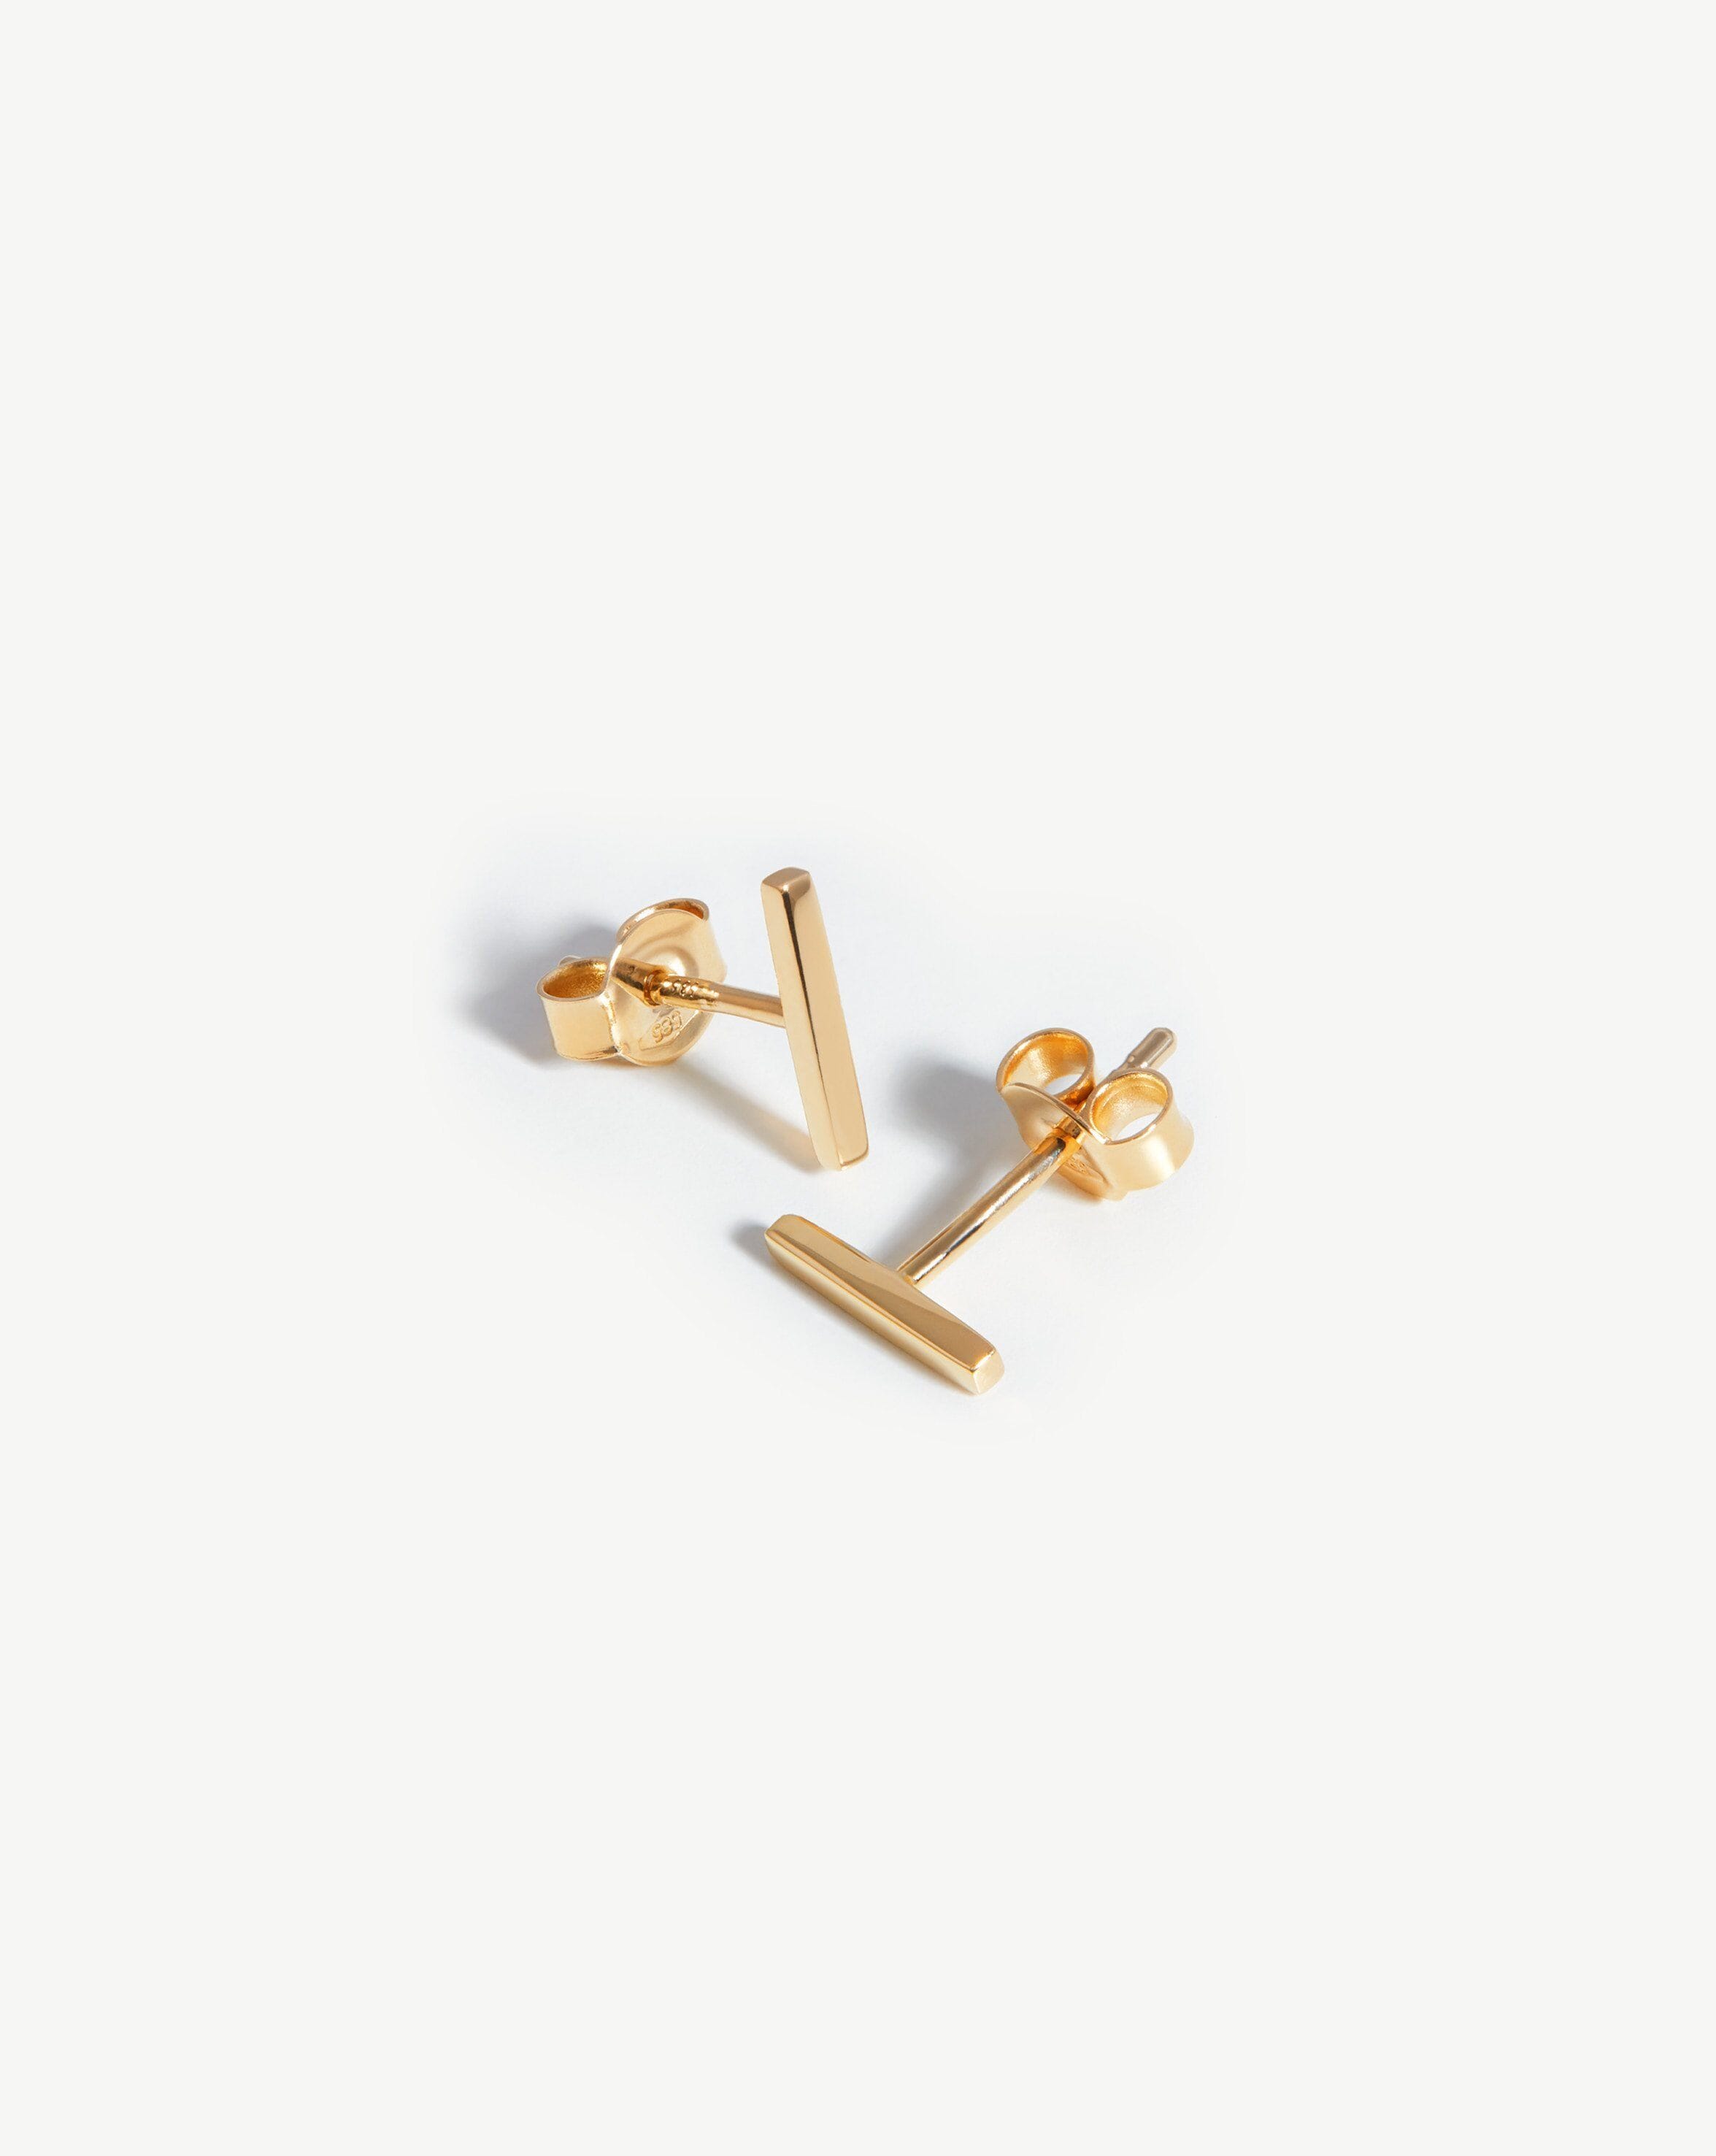 MF024890-14Y-14K Yellow Gold Small Staple Stud Earrings, 0.01Cttw-SVS Fine  Jewelry